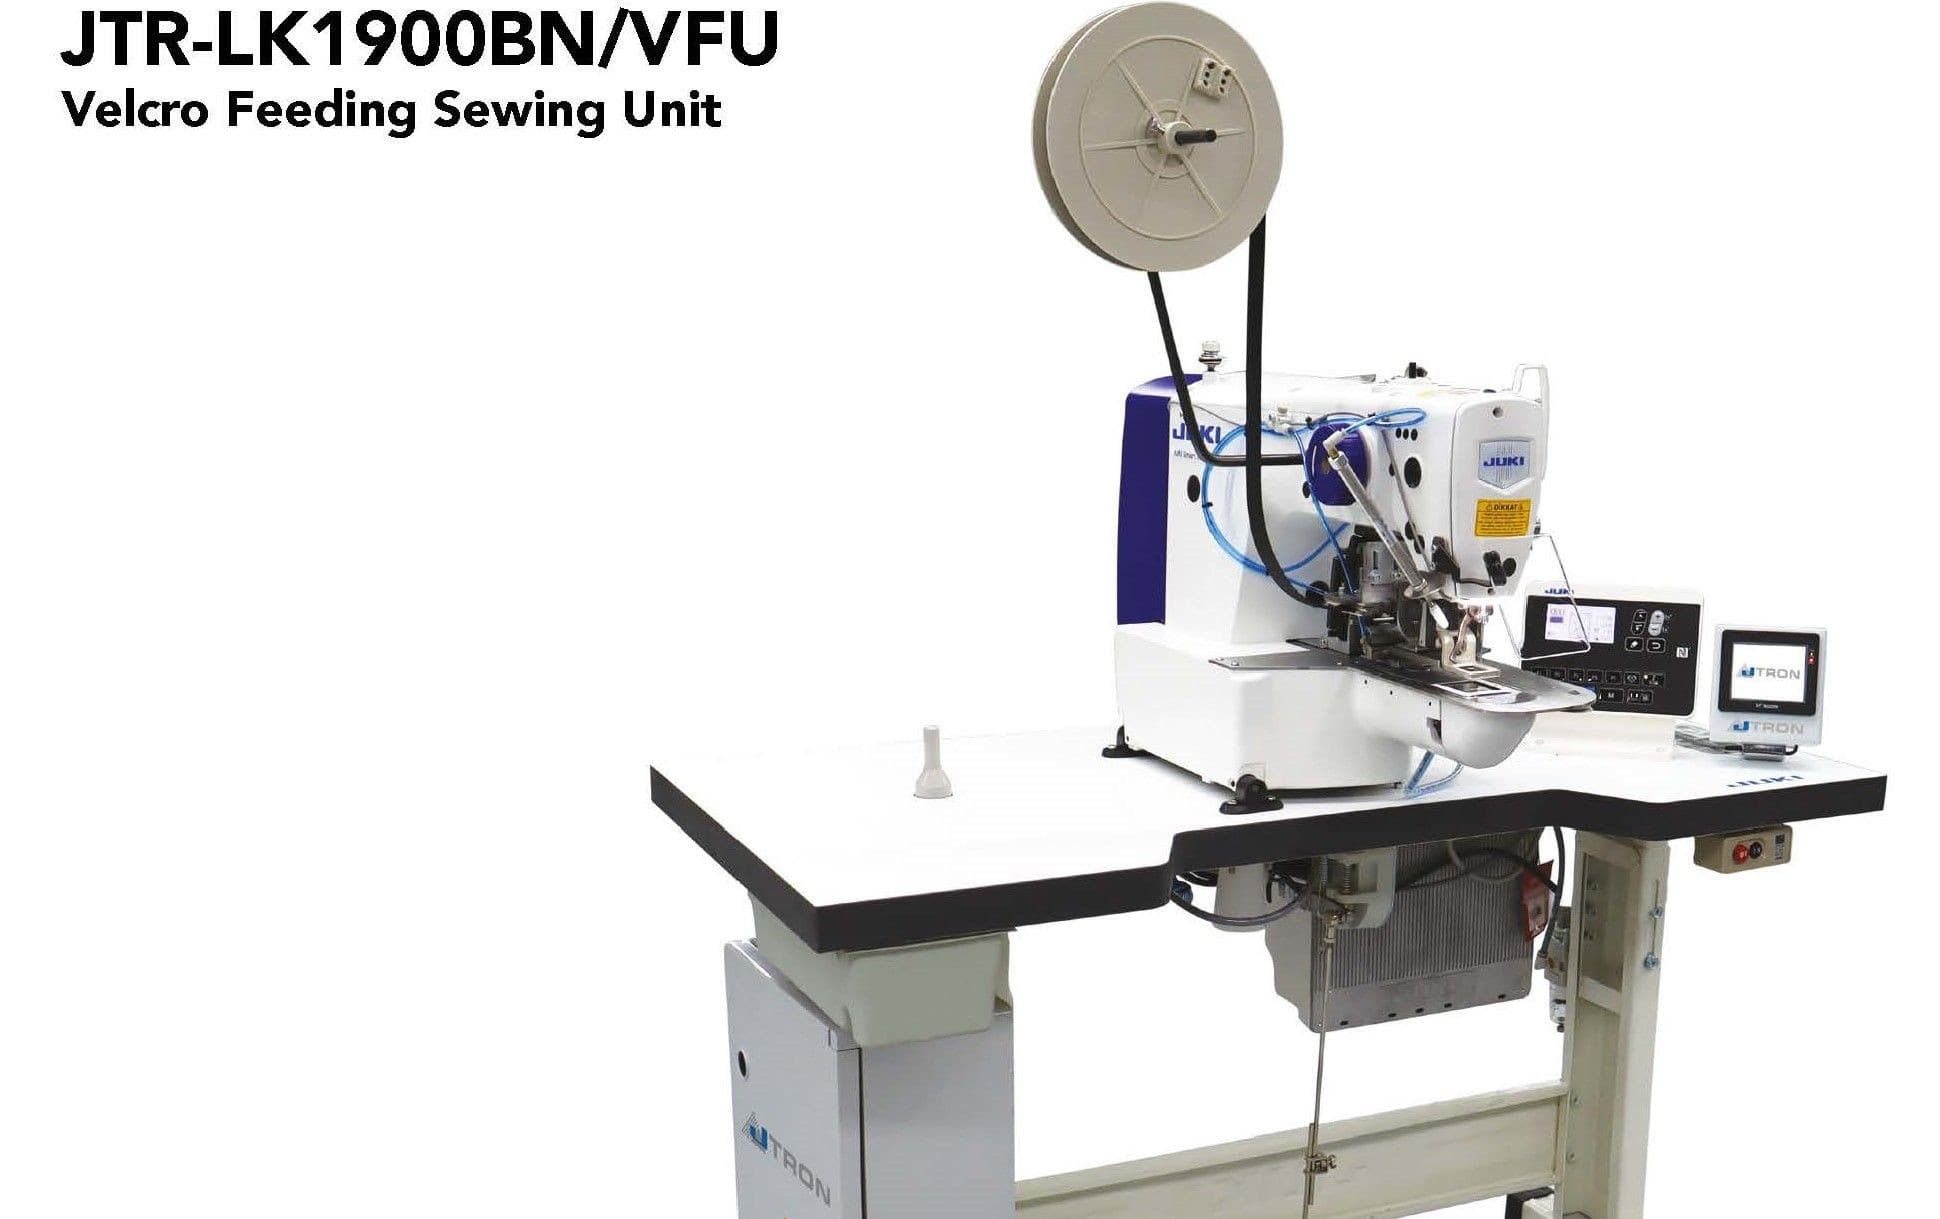 JTRON JTR-LK1900BN/VFU
Velcro Feeding Sewing Unit